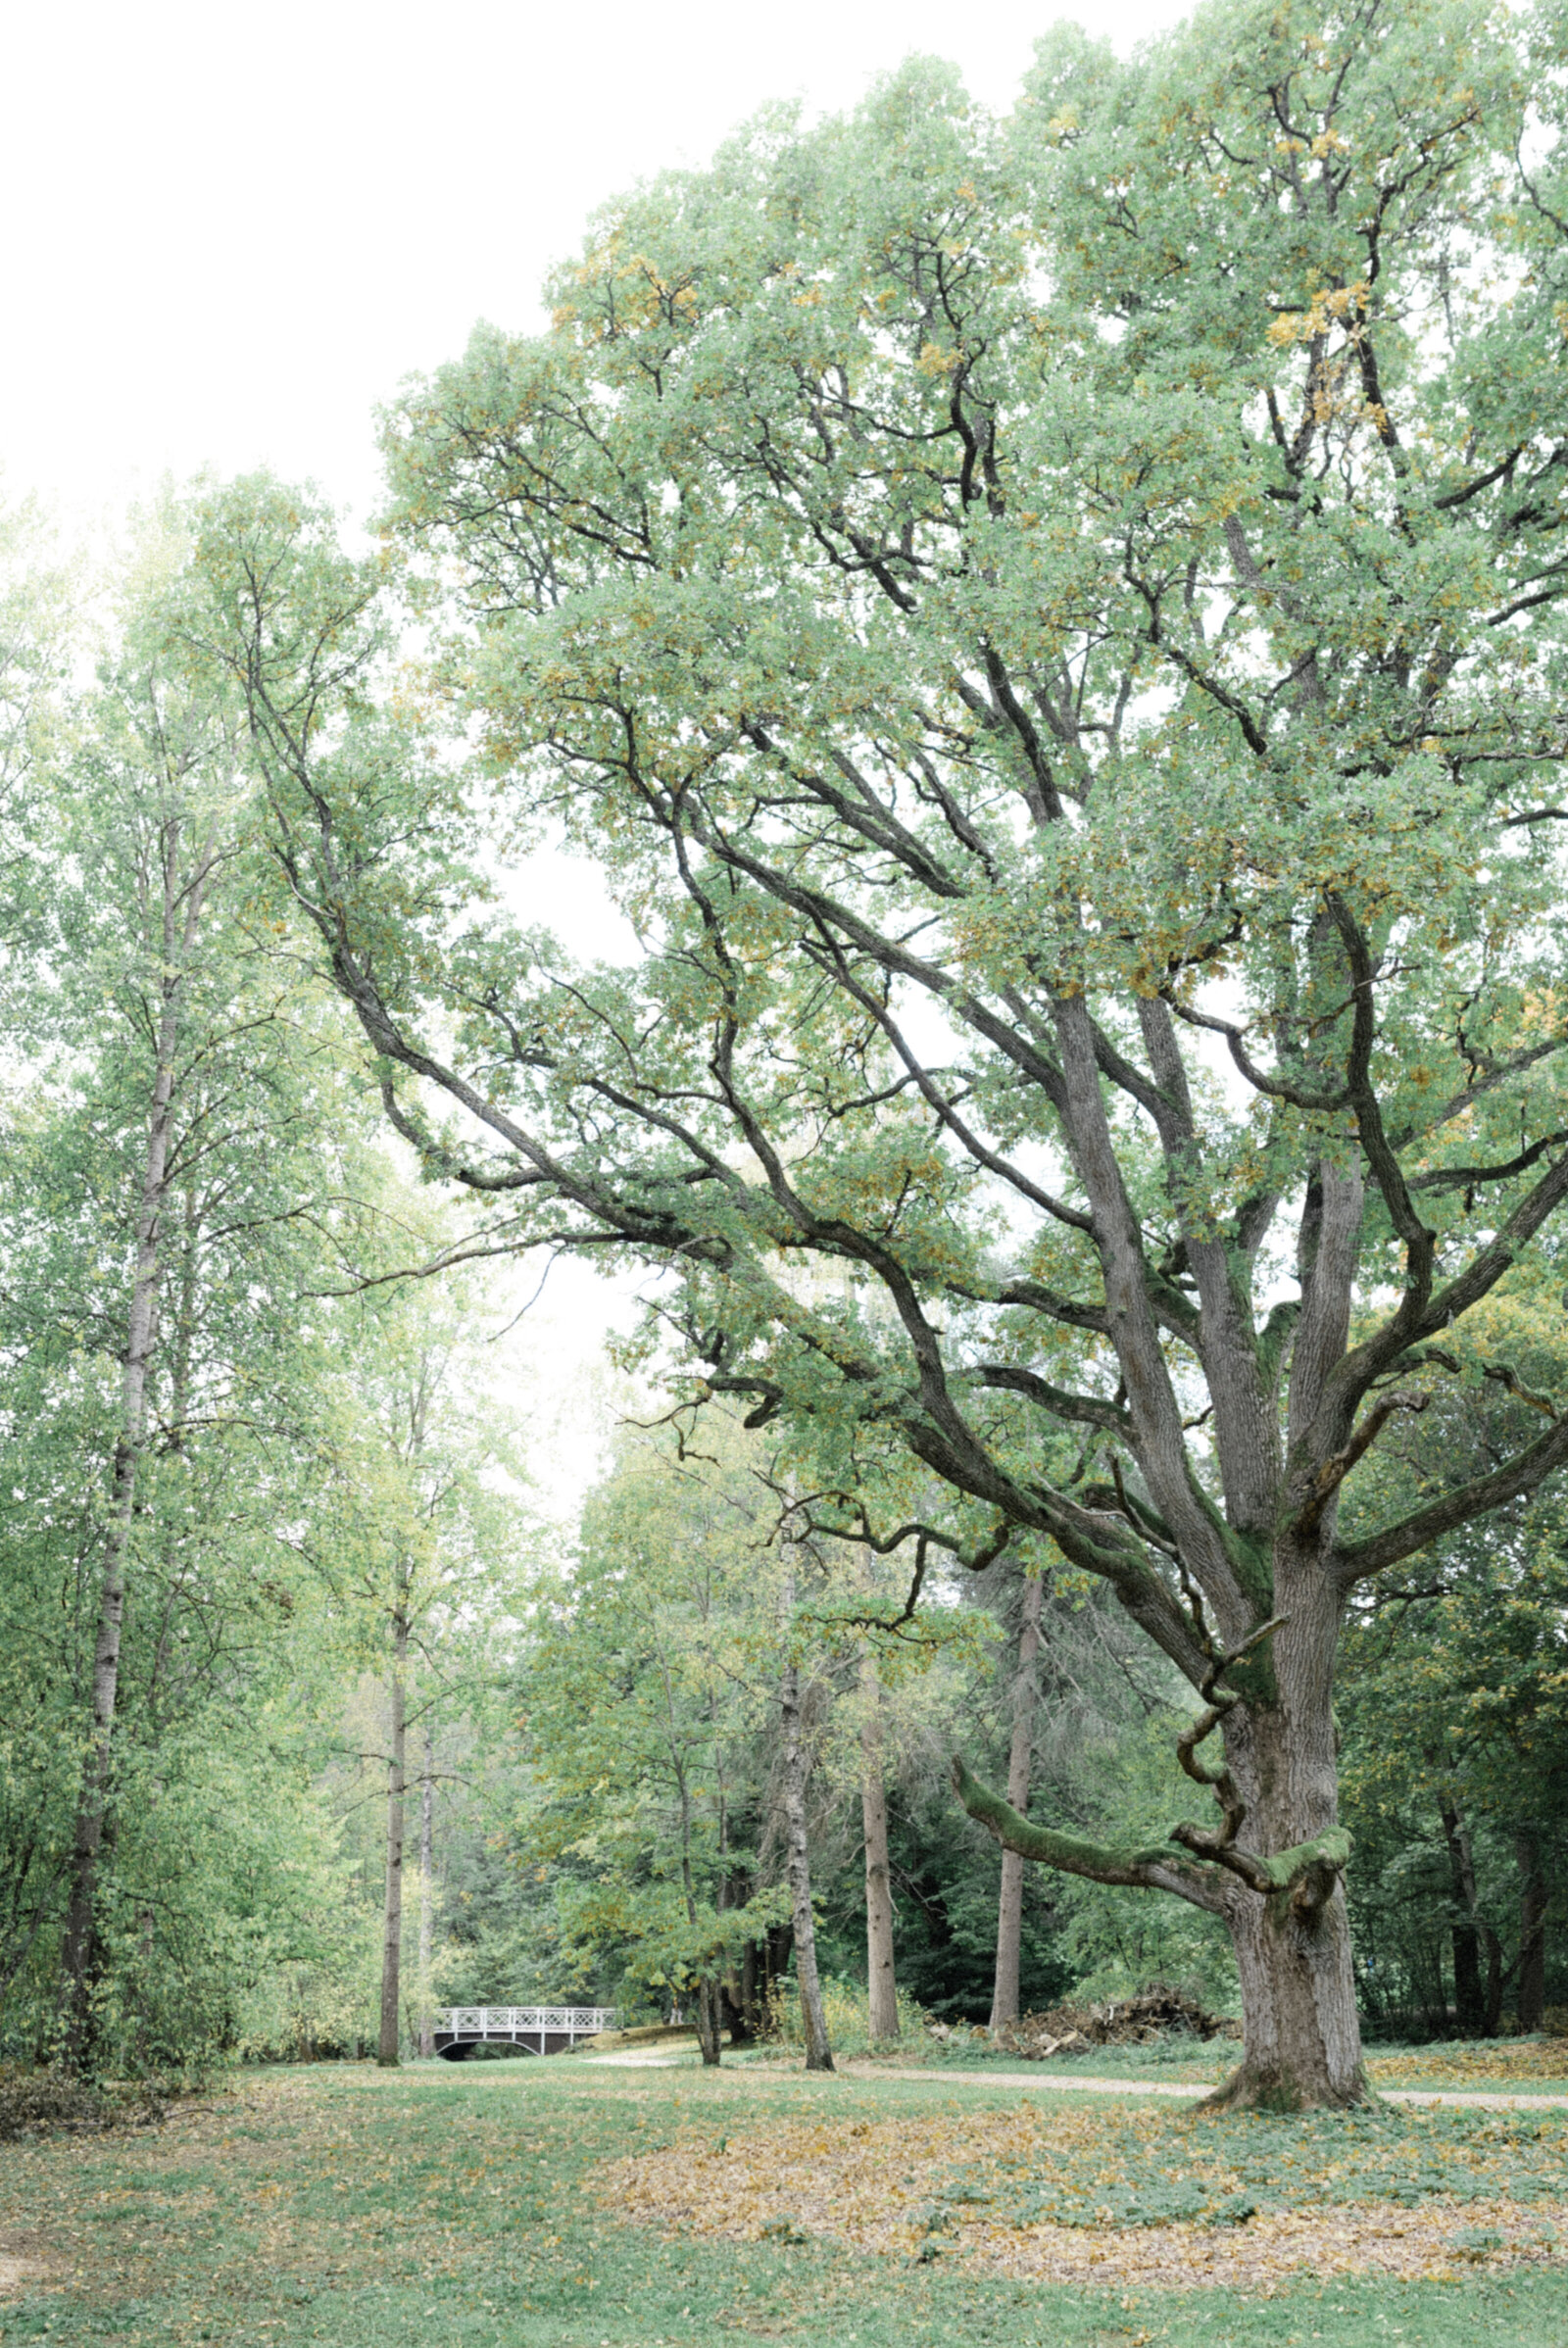 Big oaks in the park in Finland.